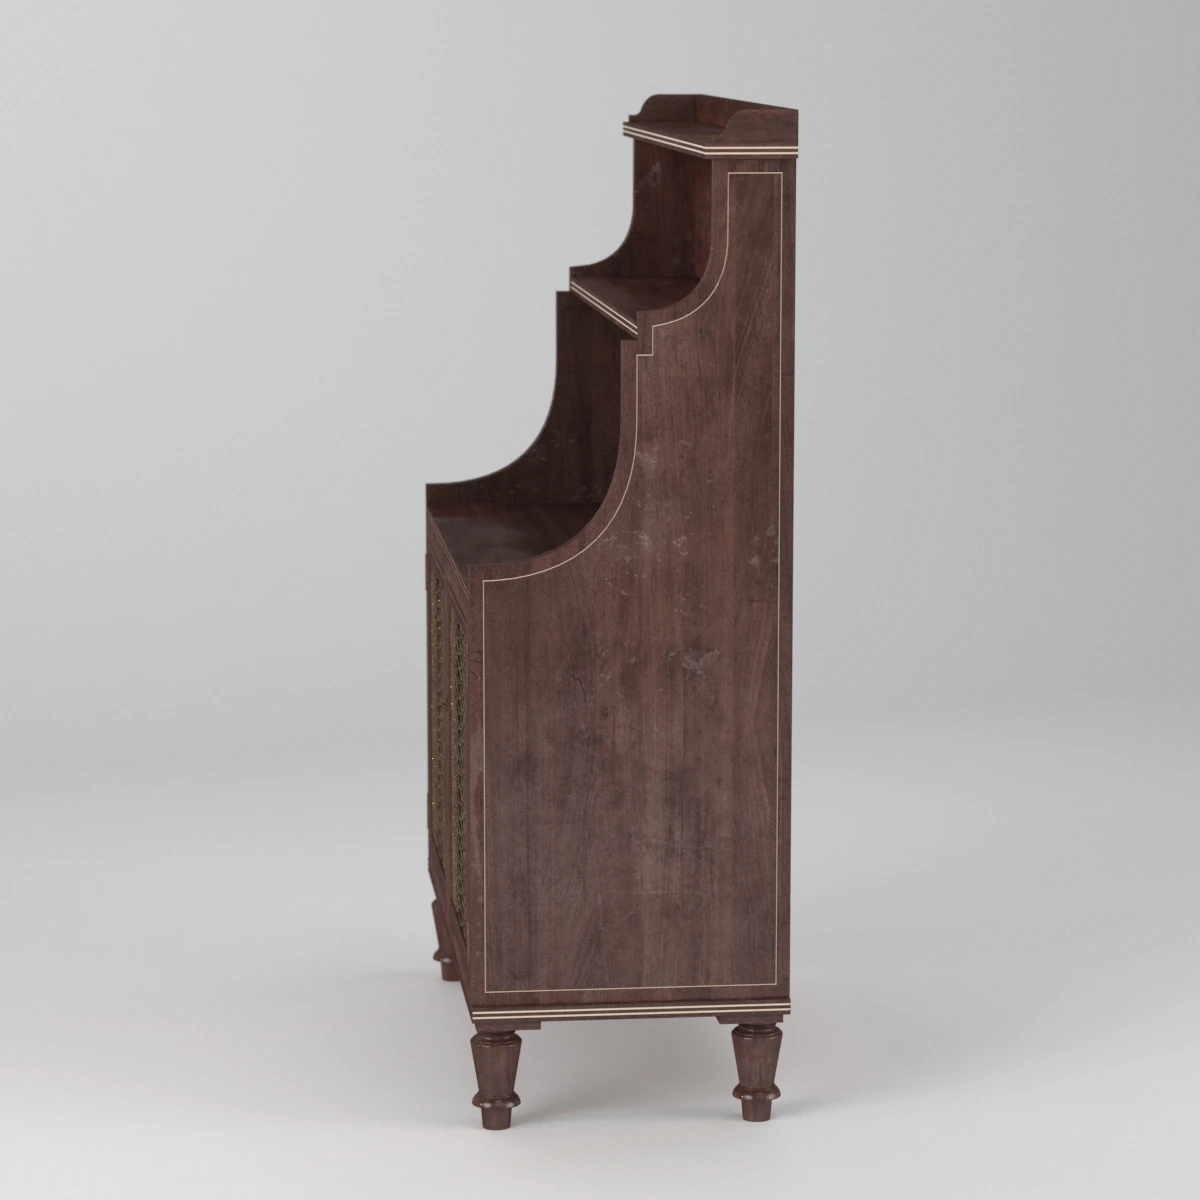 1820s English Regency Period Waterfall Bookcase 3D Model_05